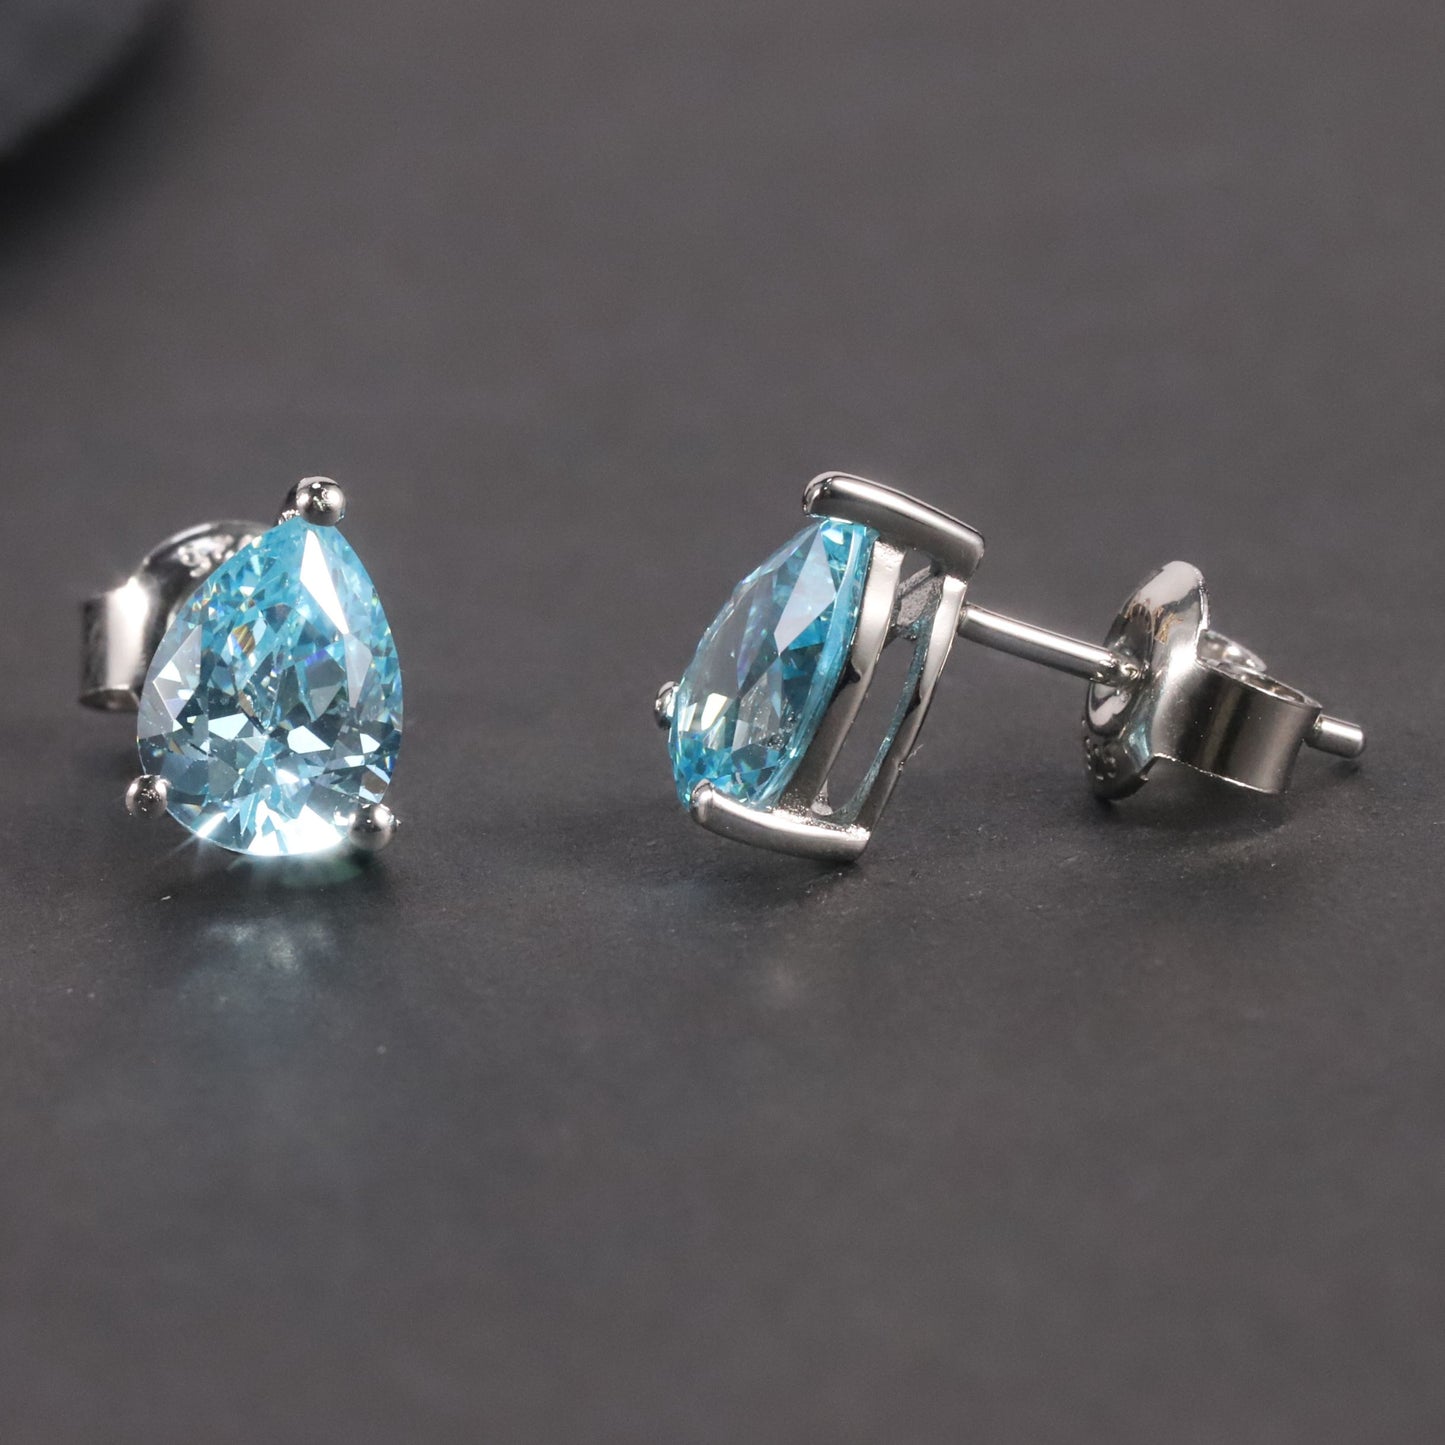 Pear Cut Stud Earrings in Sterling Silver -  Aquamarine